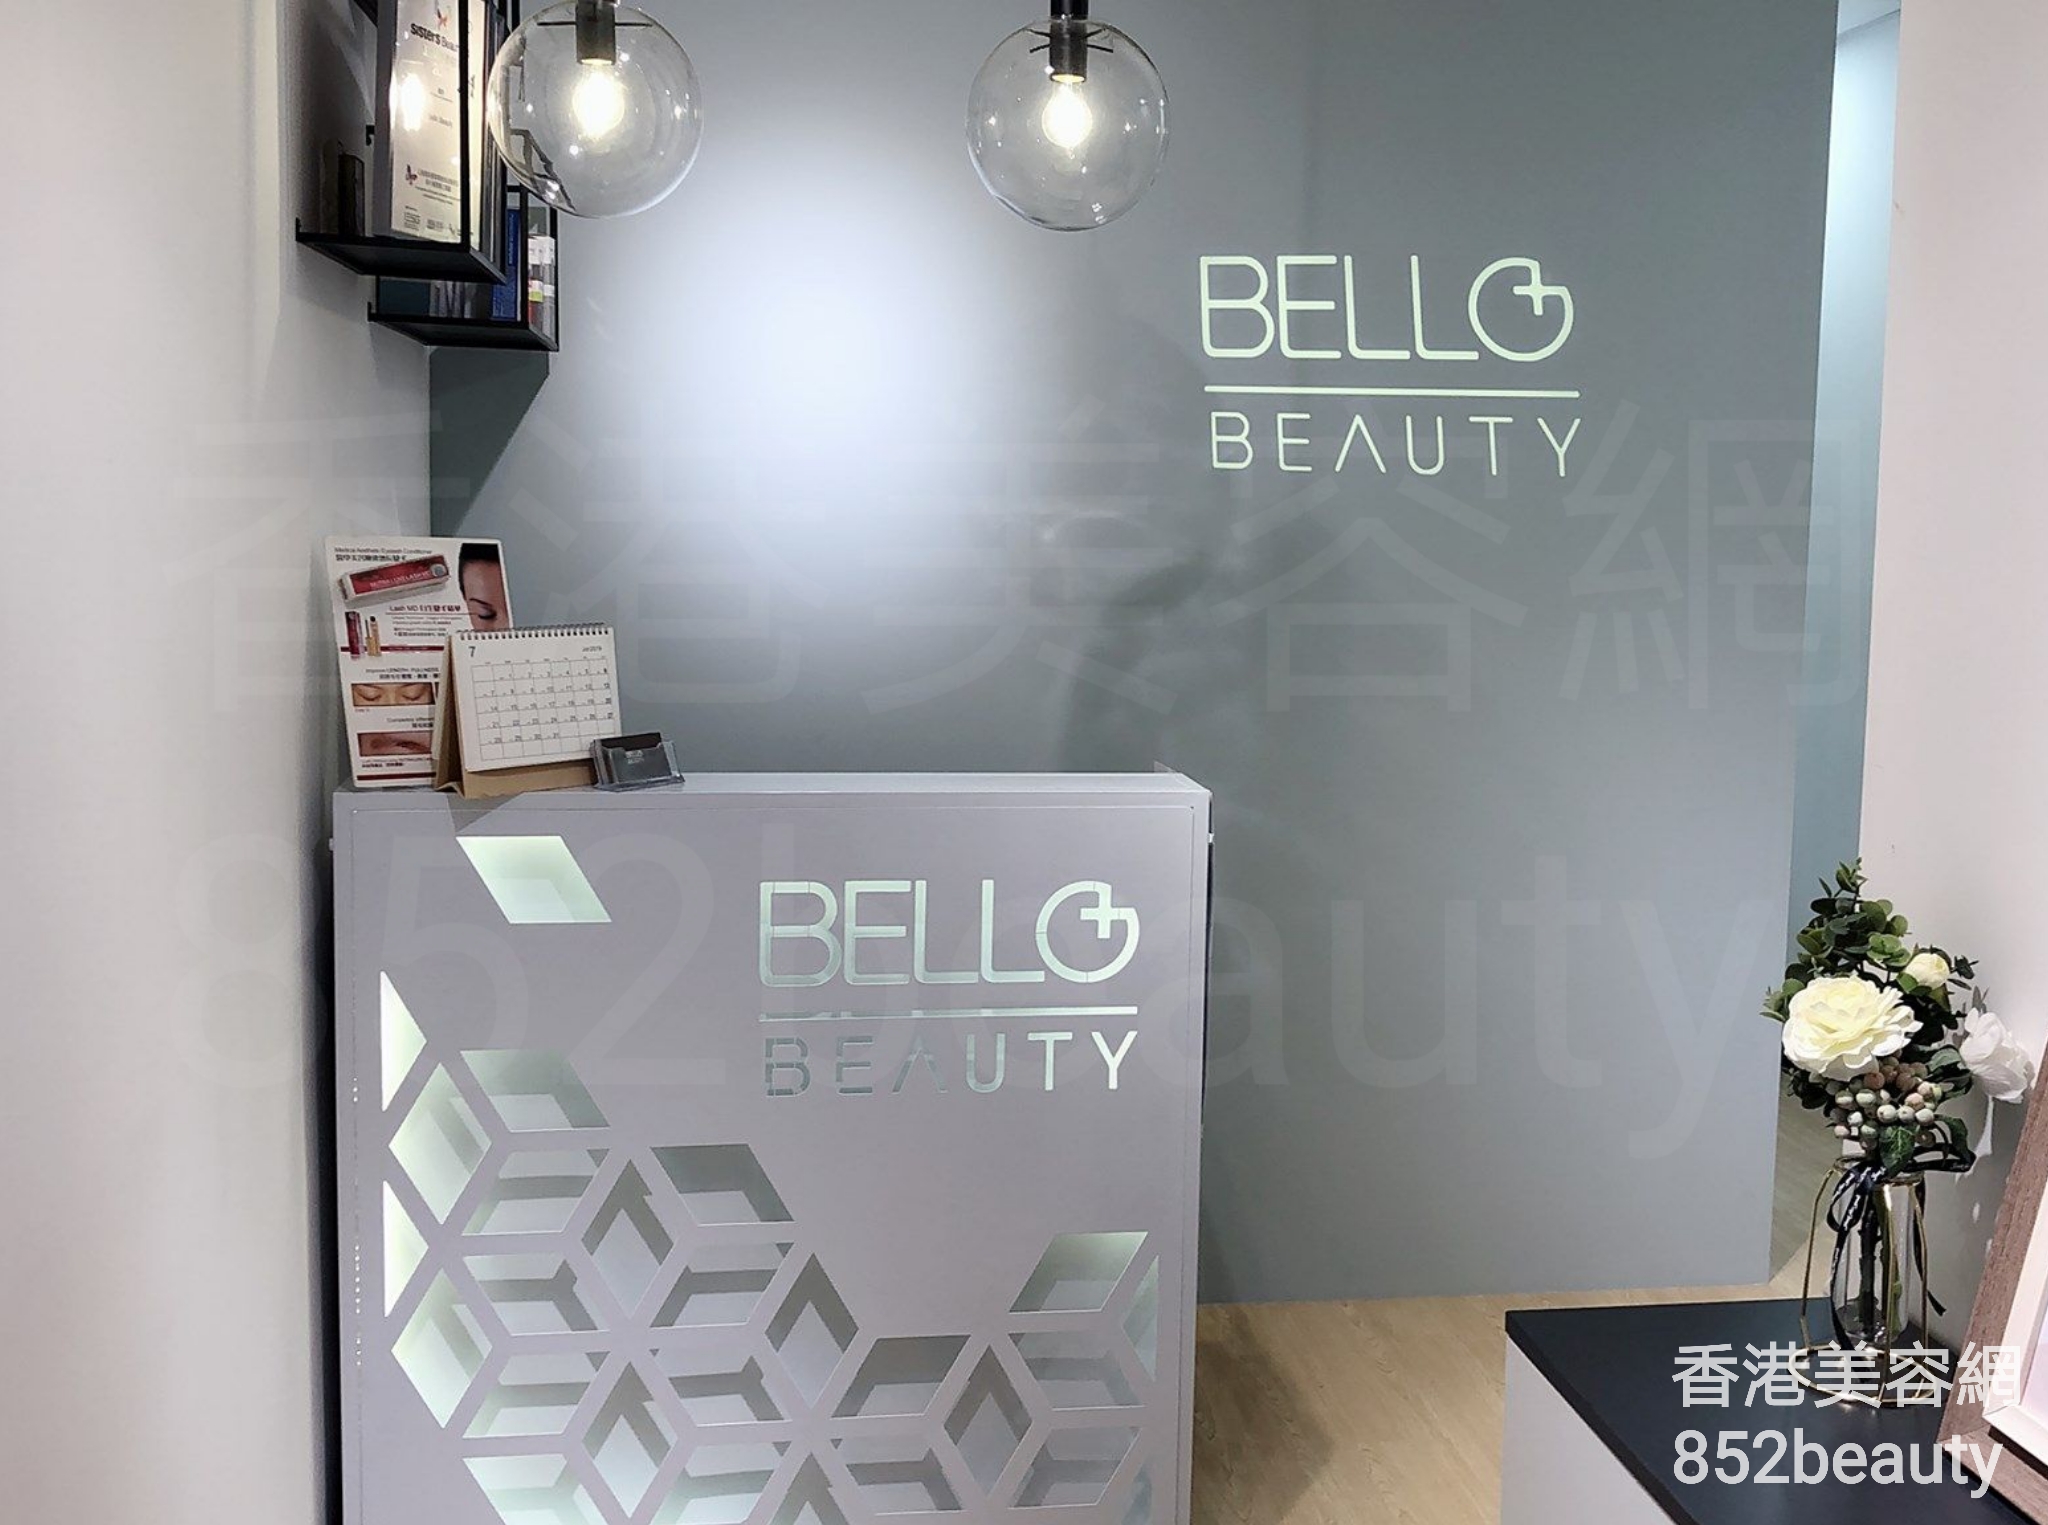 香港美容網 Hong Kong Beauty Salon 美容院 / 美容師: Bello Beauty